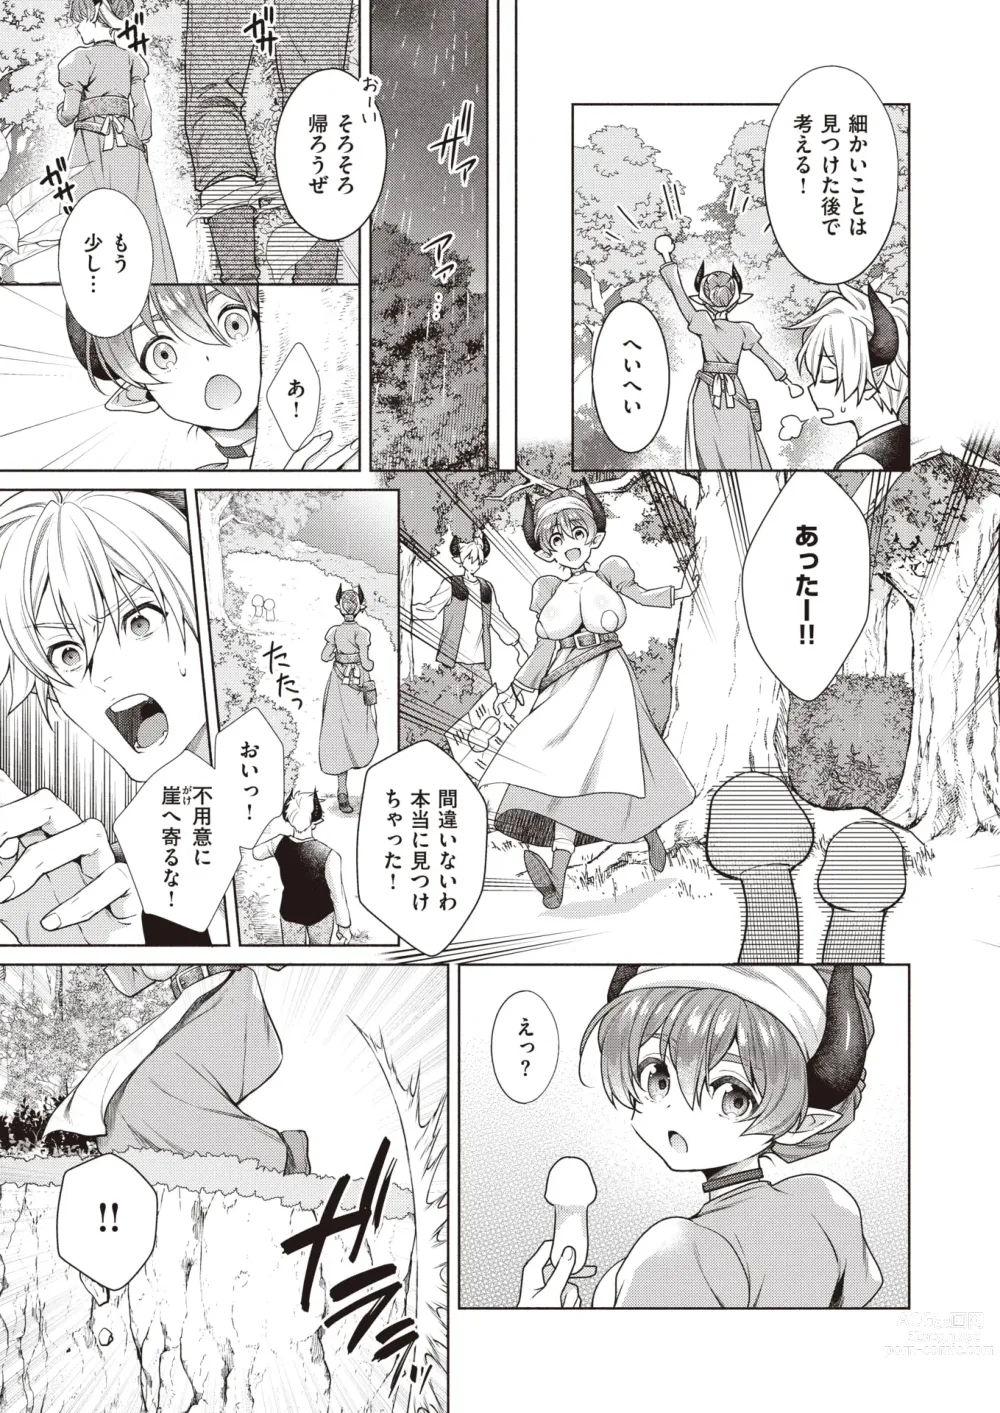 Page 4 of manga Isekai Rakuten Vol. 28